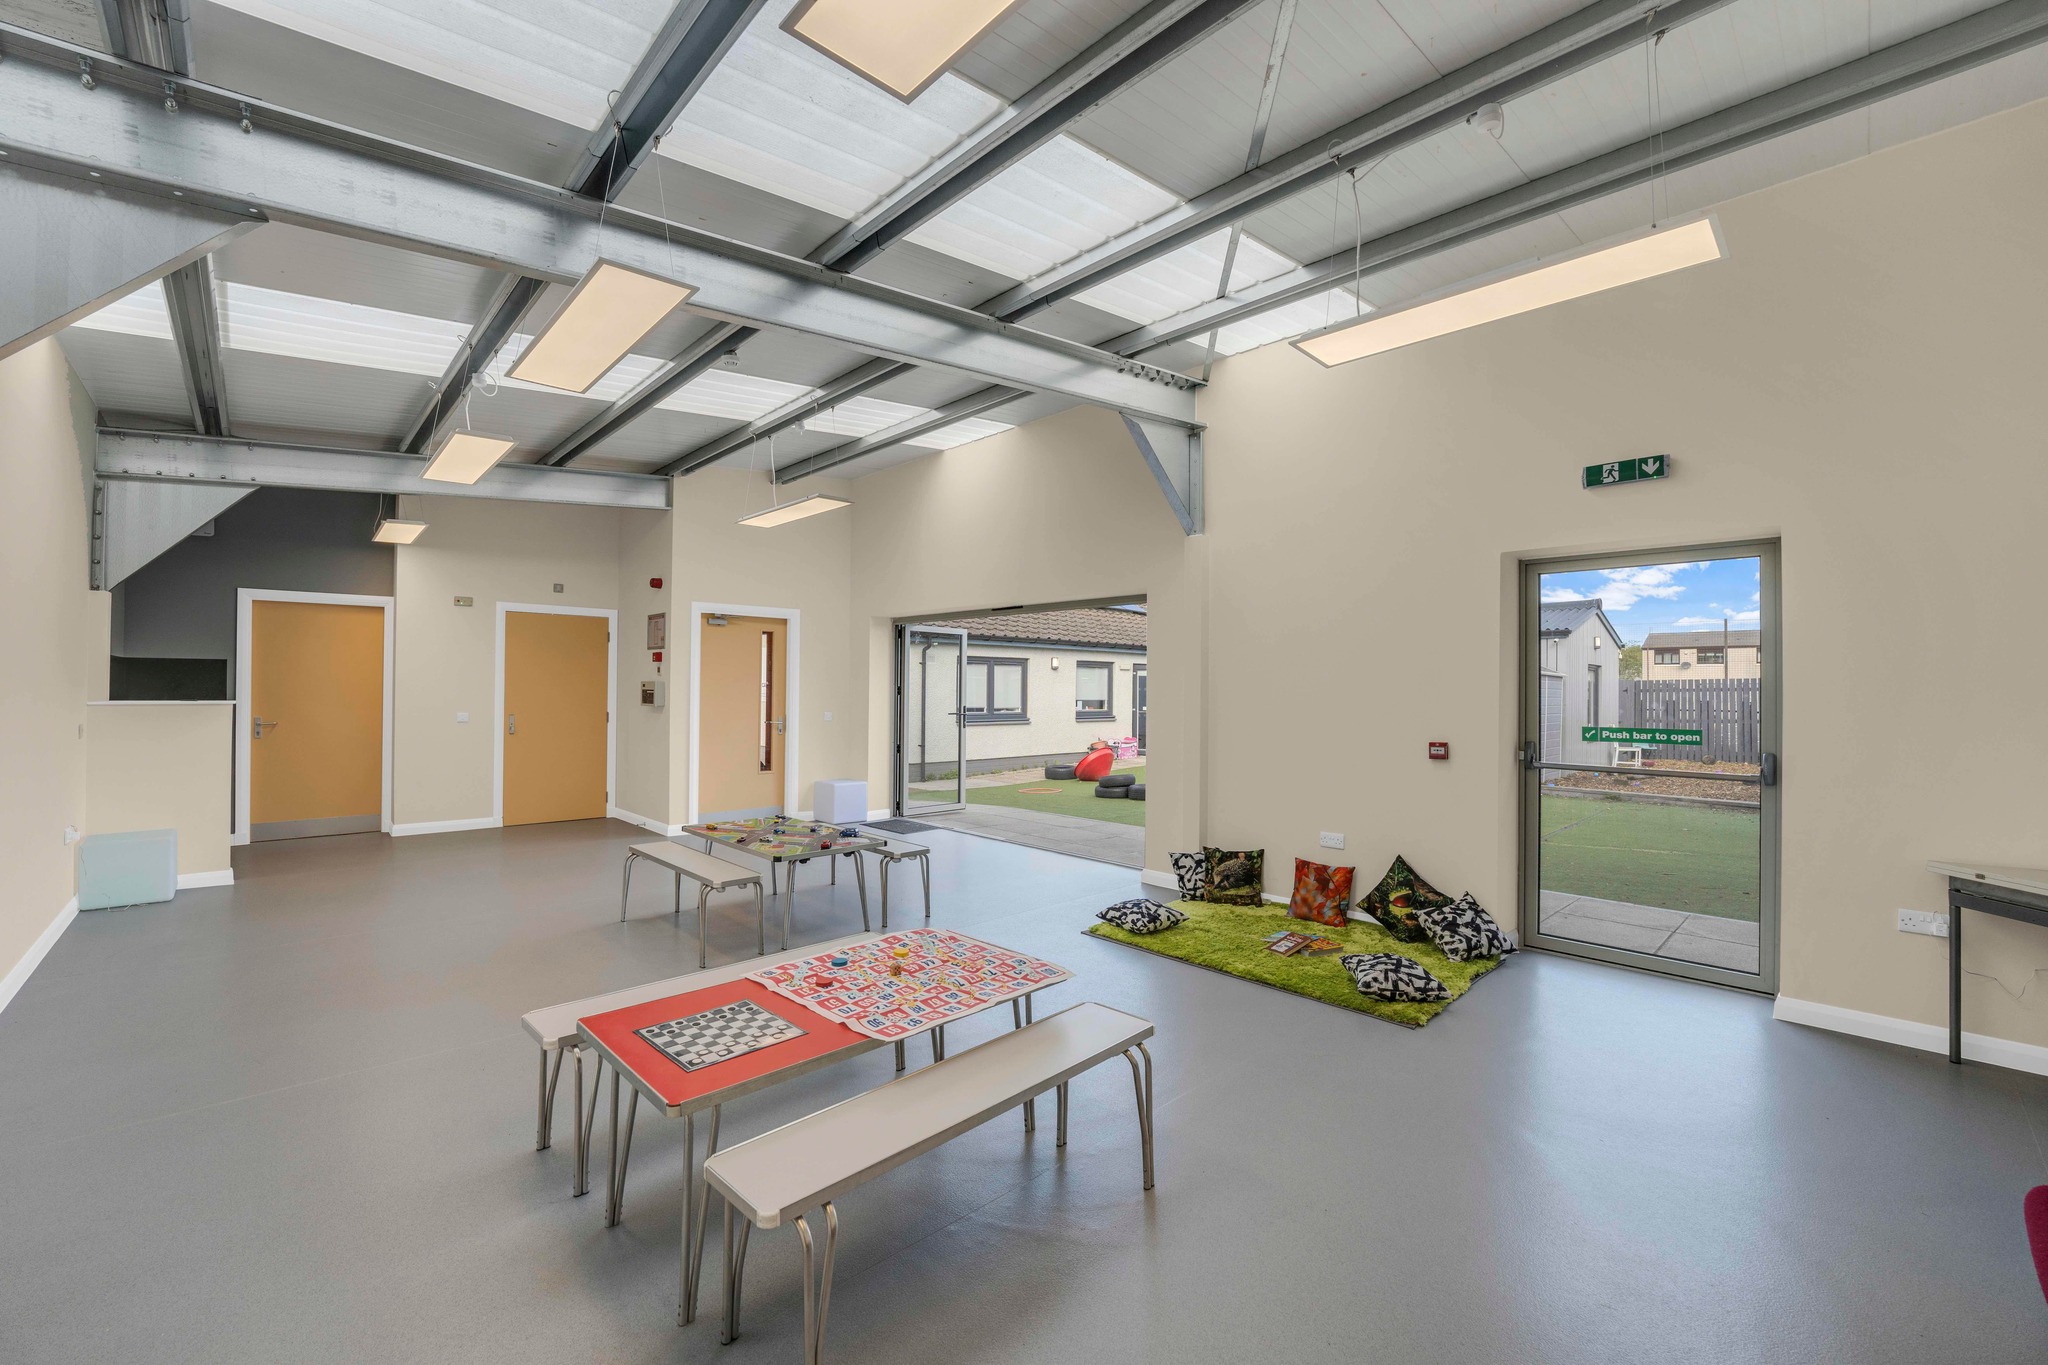 Renfrewshire childcare centre moves closer to net zero with eco-friendly annexe